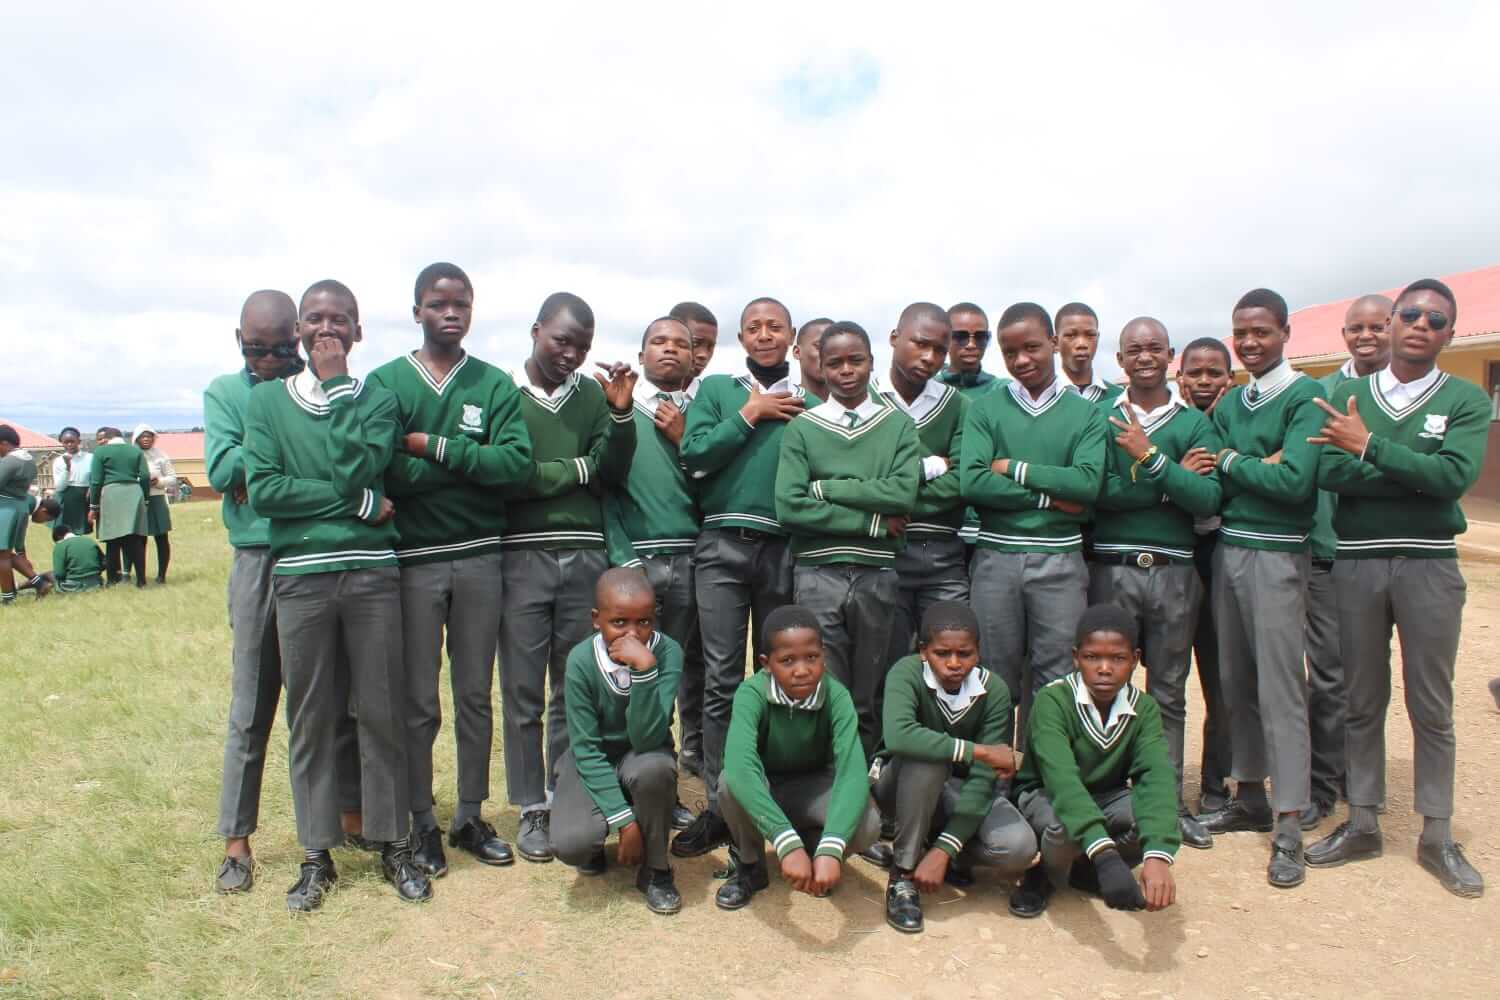 Intsingizi JSS bids Farewell to It’s Grade 9 Learners: A bitter  Sweet  Moment